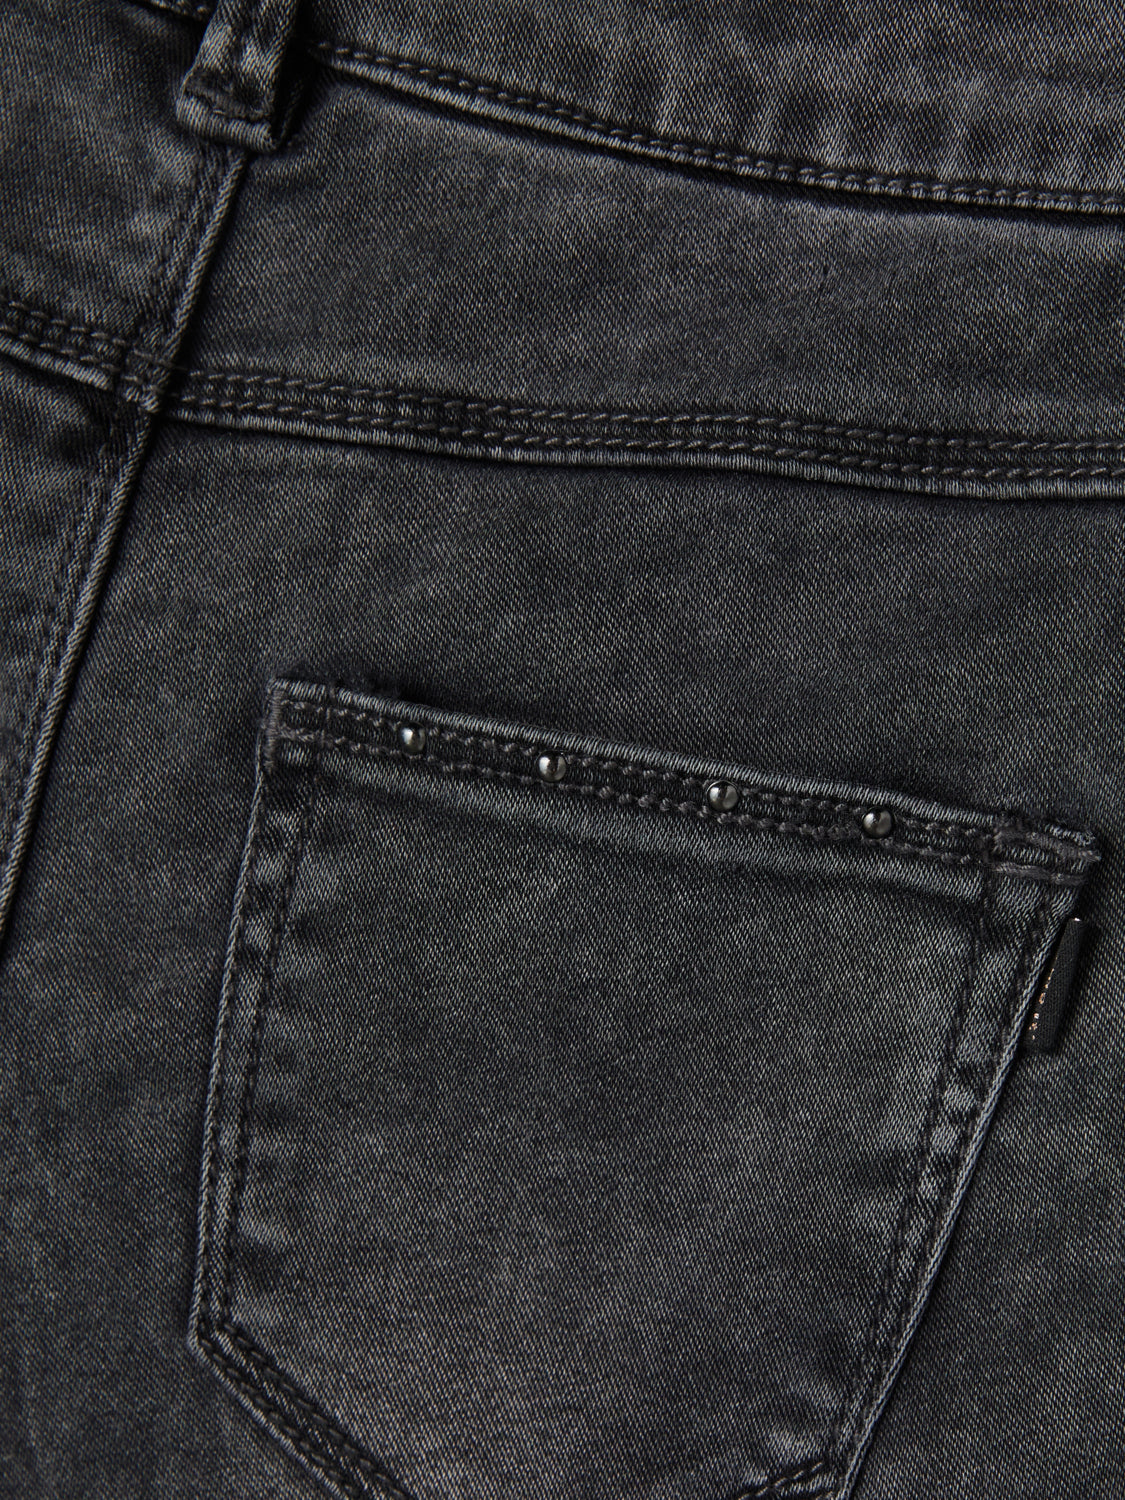 NKFPOLLY Jeans - Dark Grey Denim